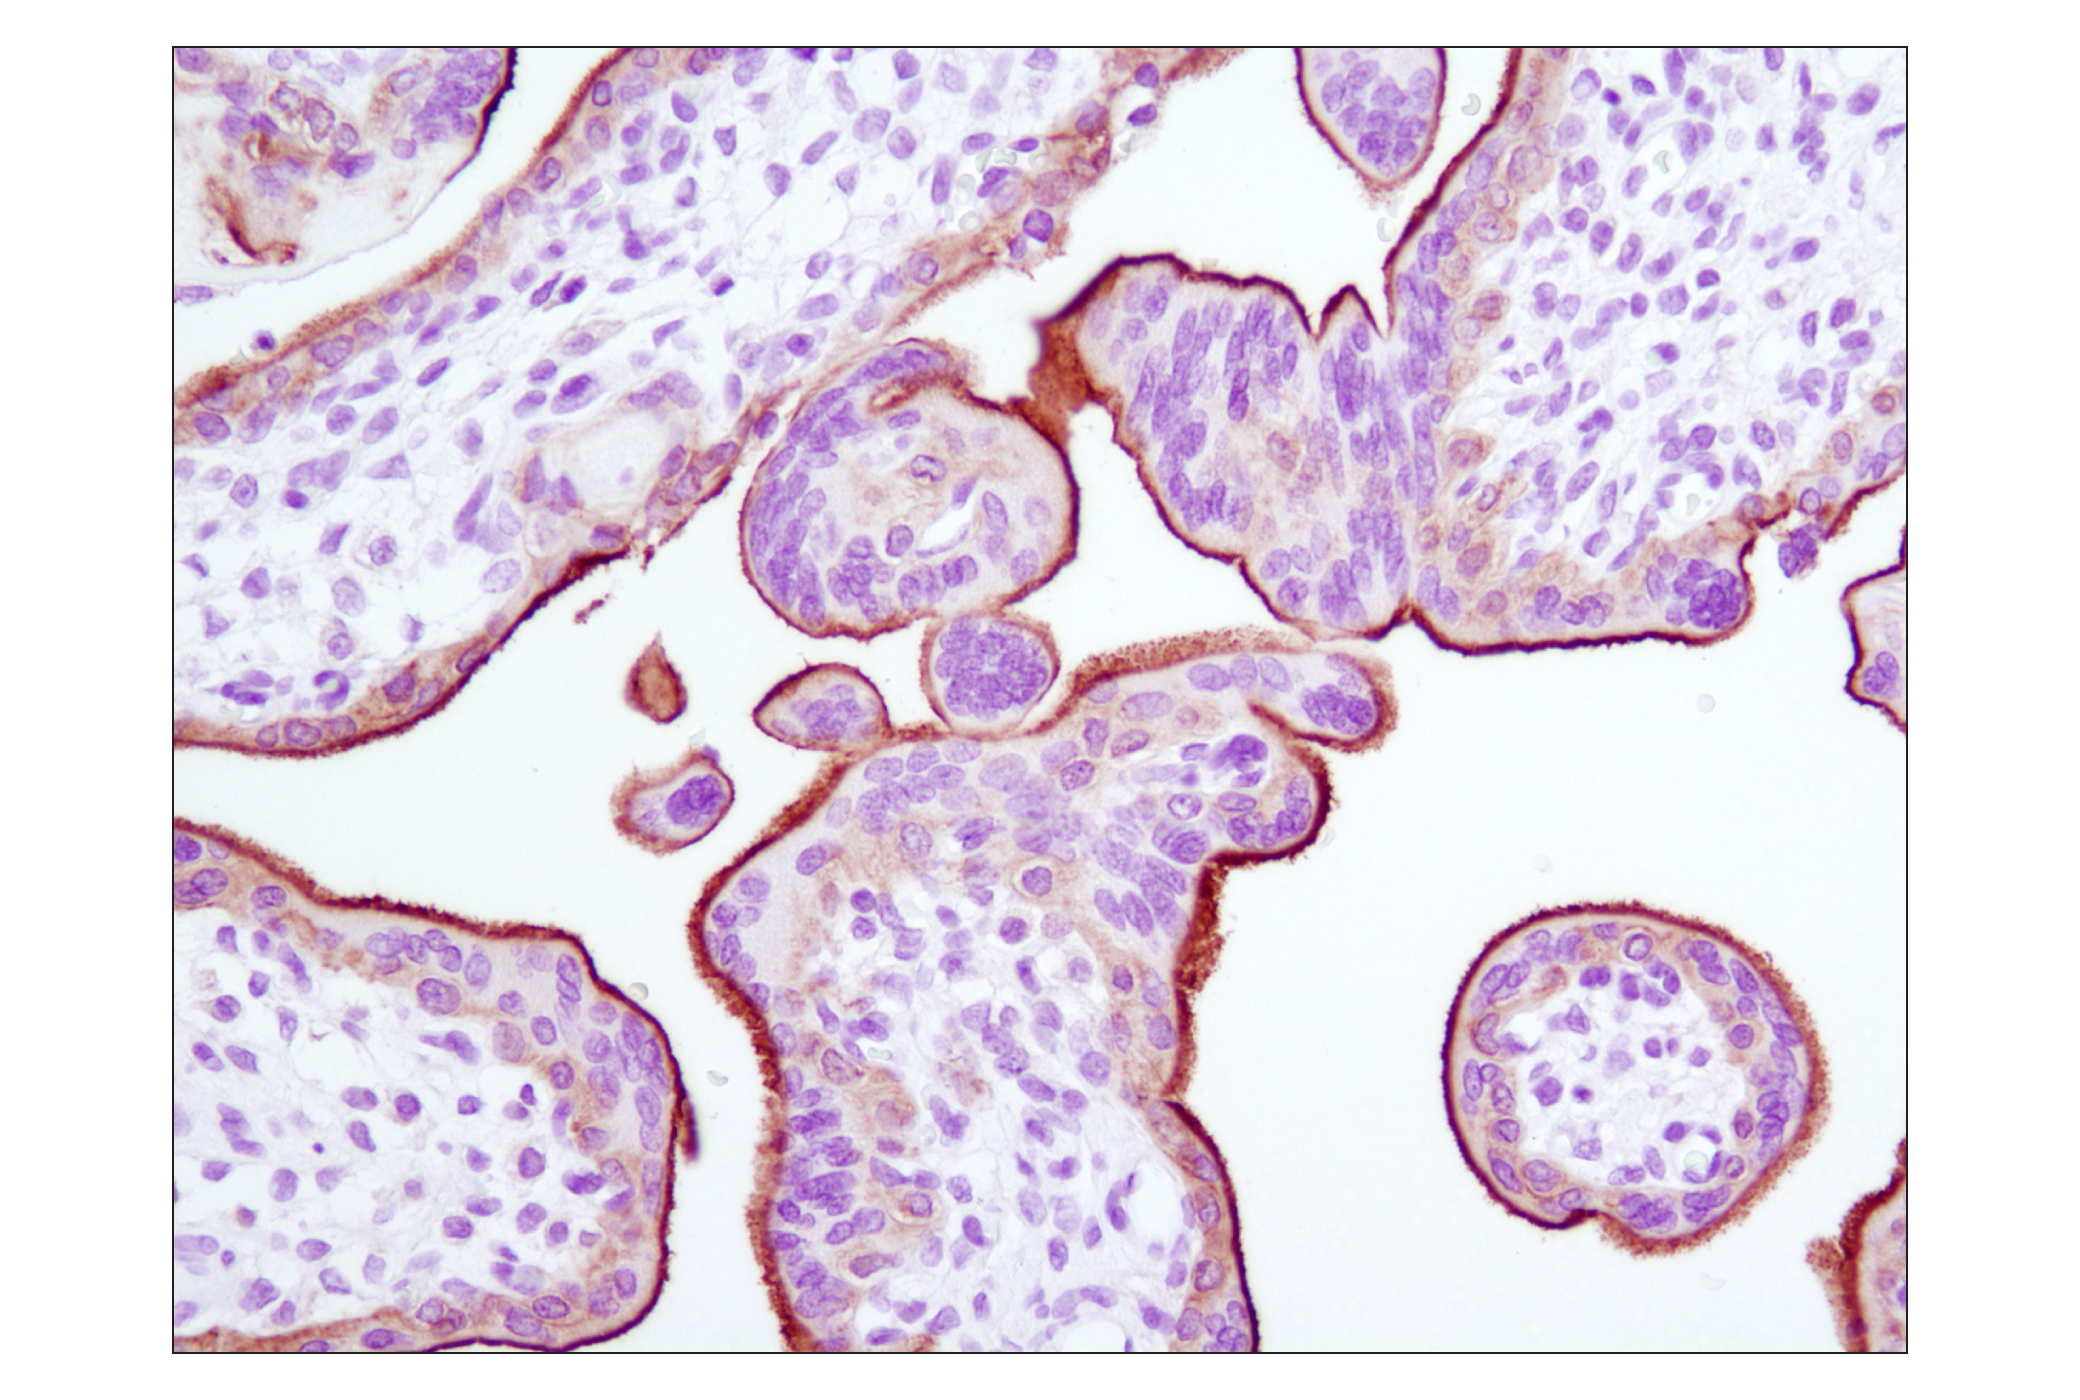  Image 14: PhosphoPlus® EGFR (Tyr1068) Antibody Duet